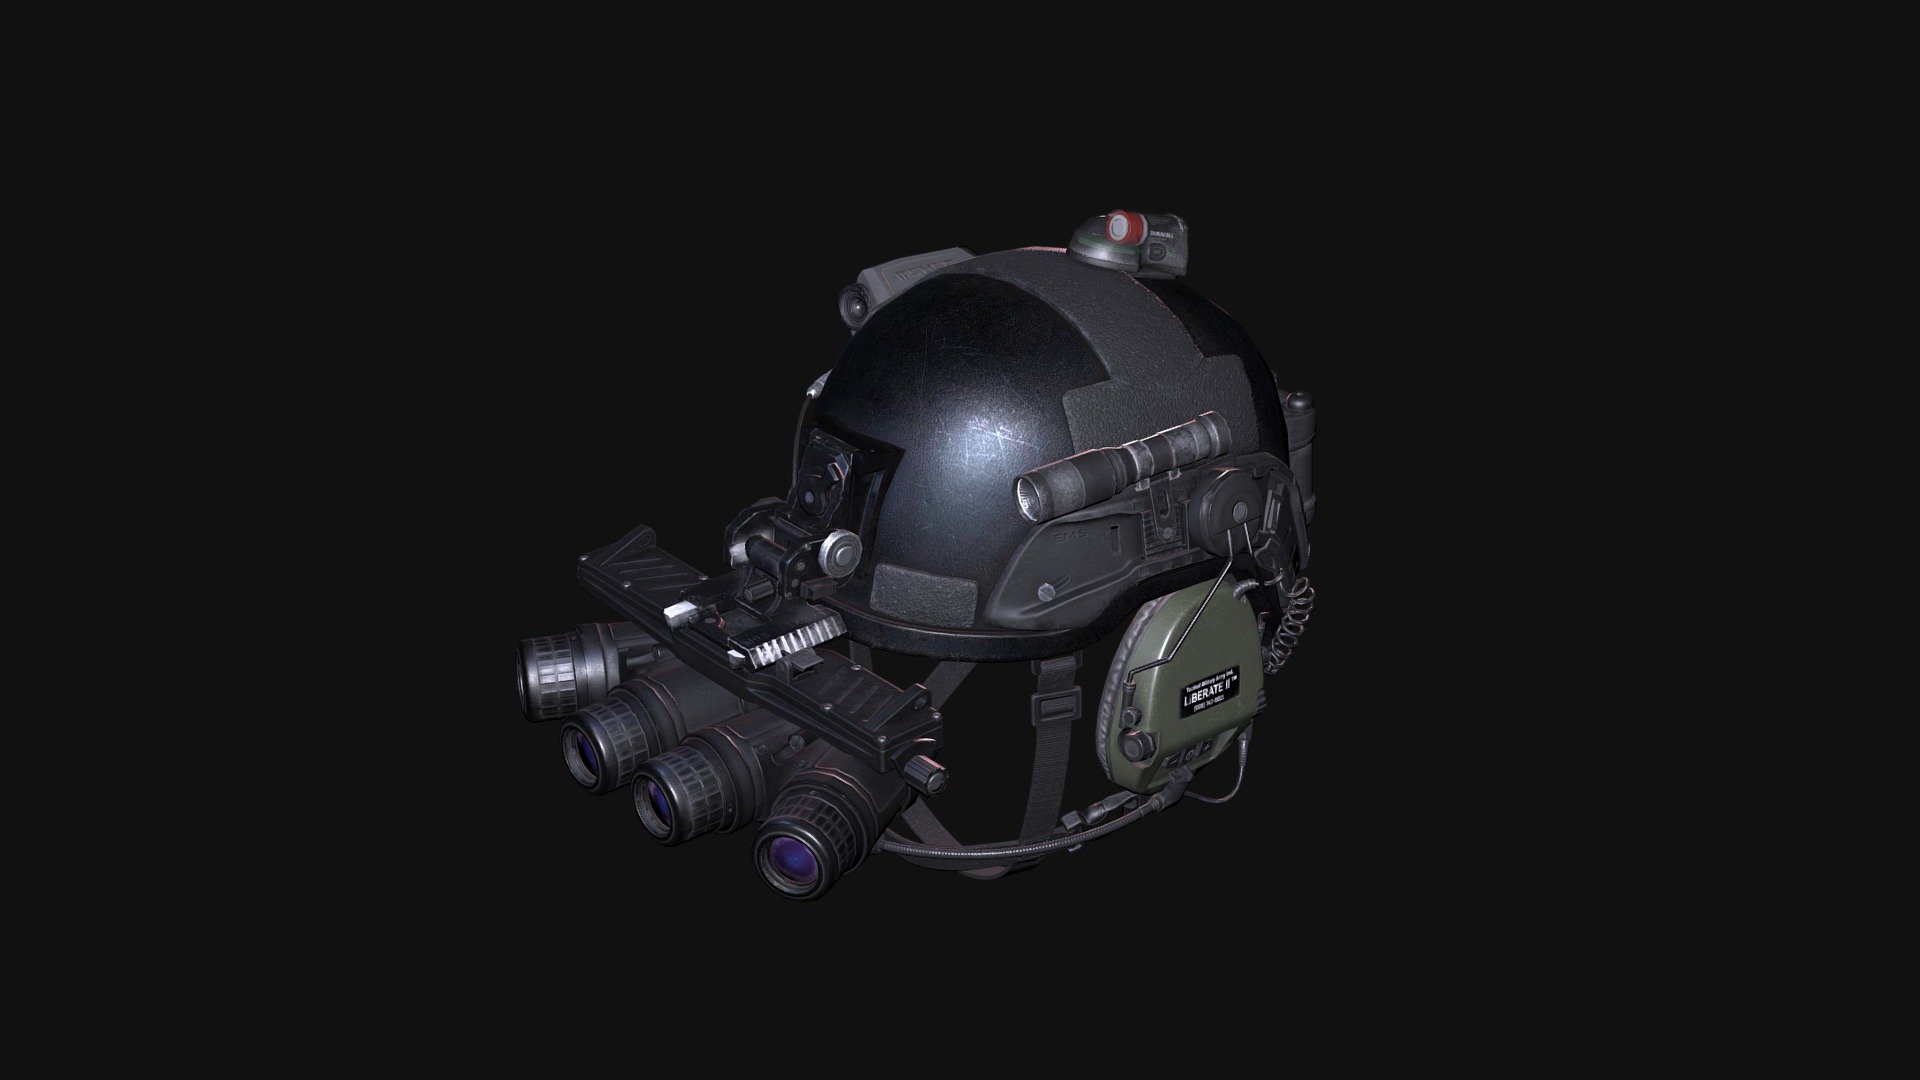 Military Helmet with Night Vision Goggles model by nadiiaplaunova [98ca794]